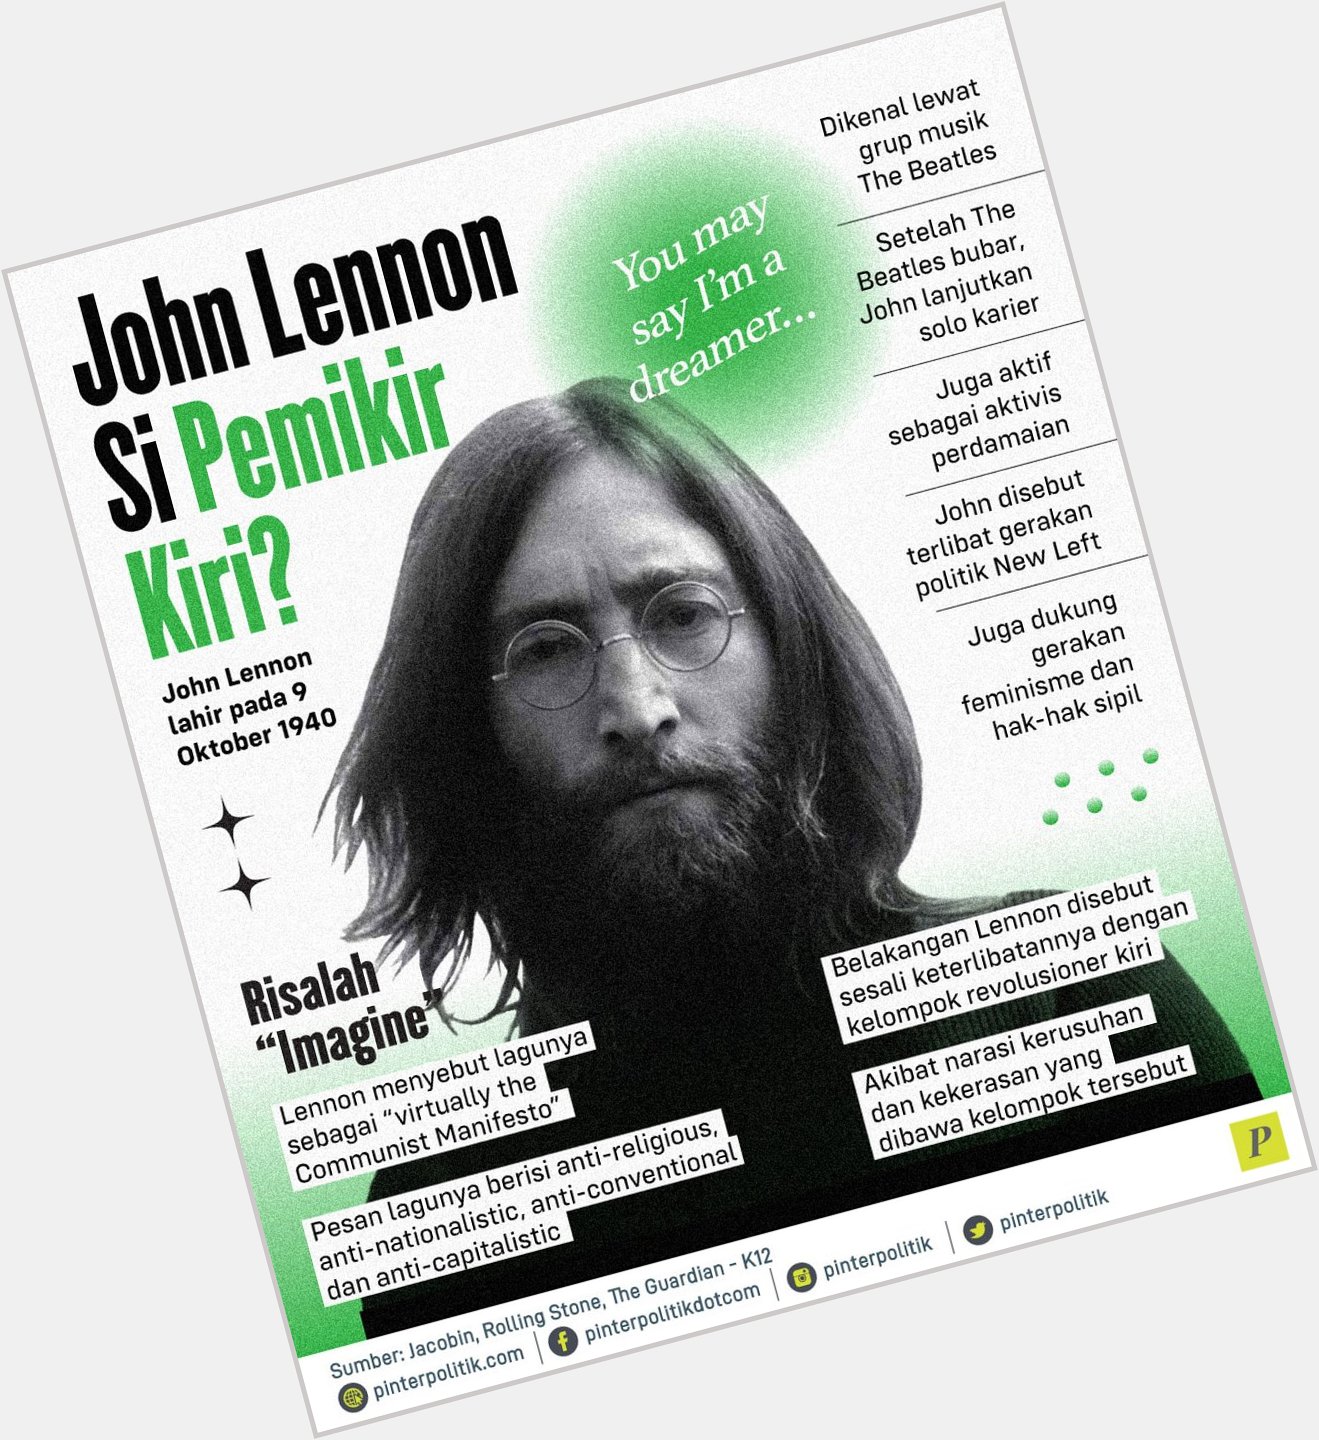 Happy birthday John Lennon.   